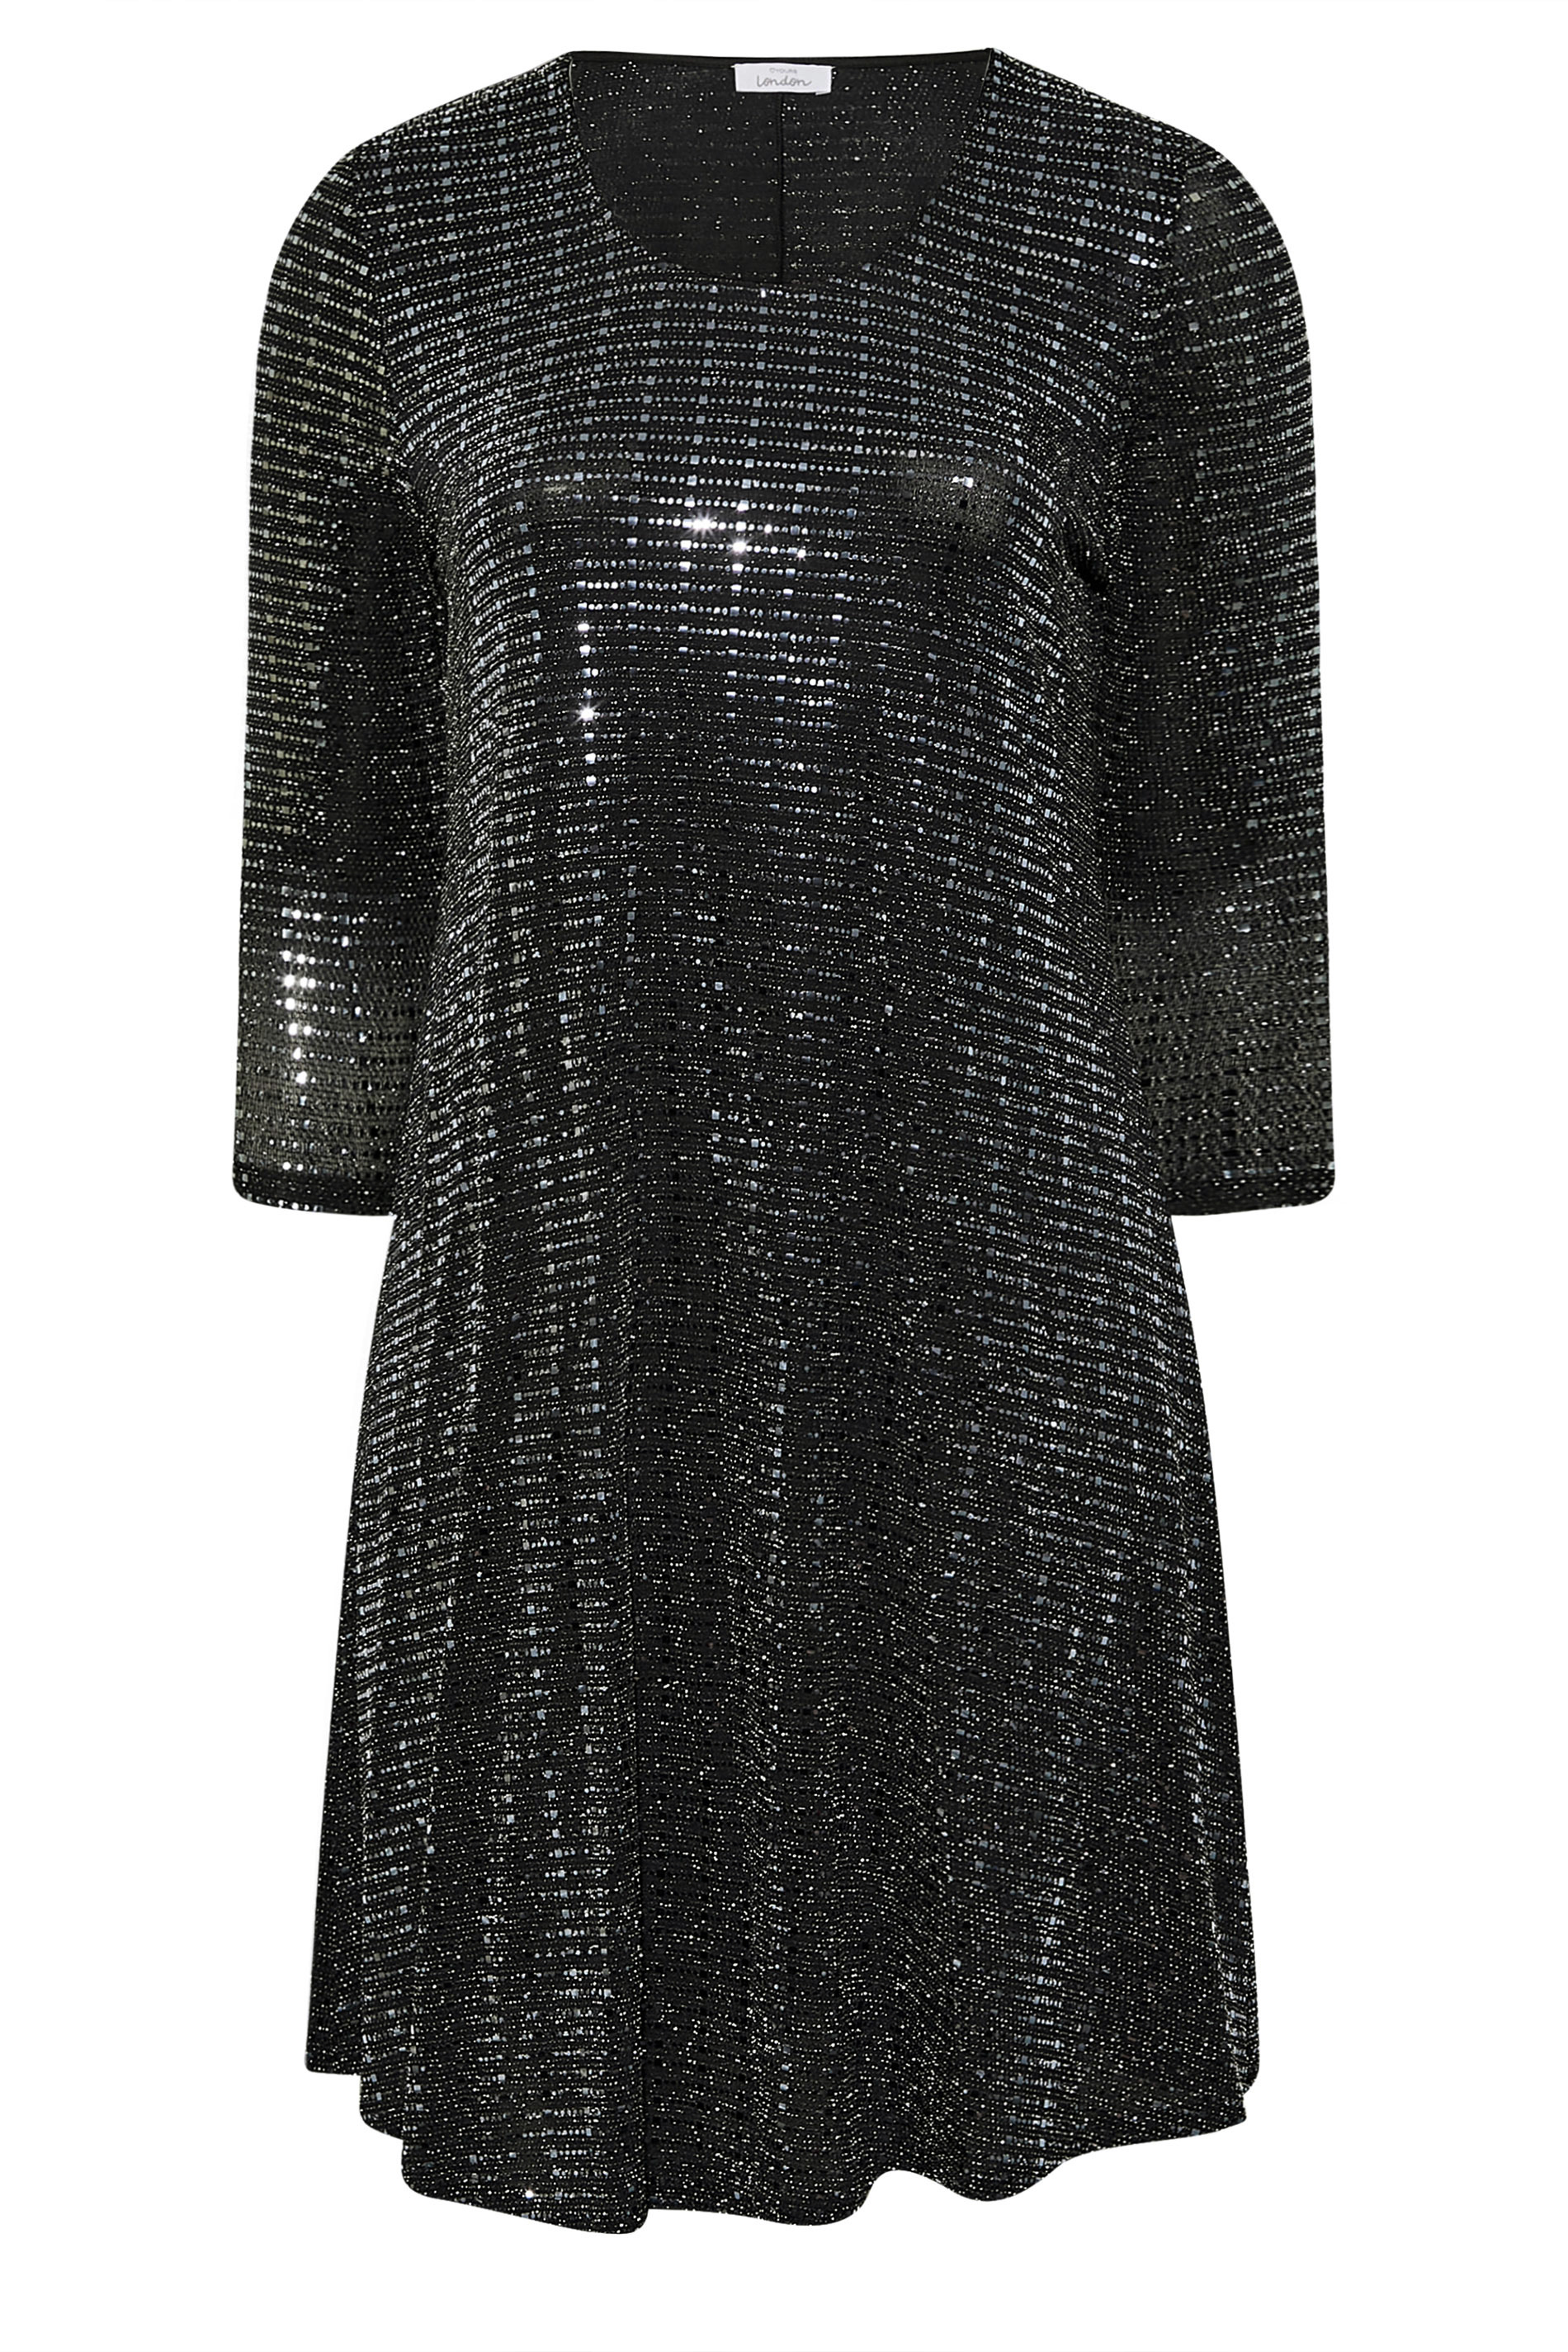 YOURS LONDON Plus Size Black Metallic Swing Dress | Yours Clothing